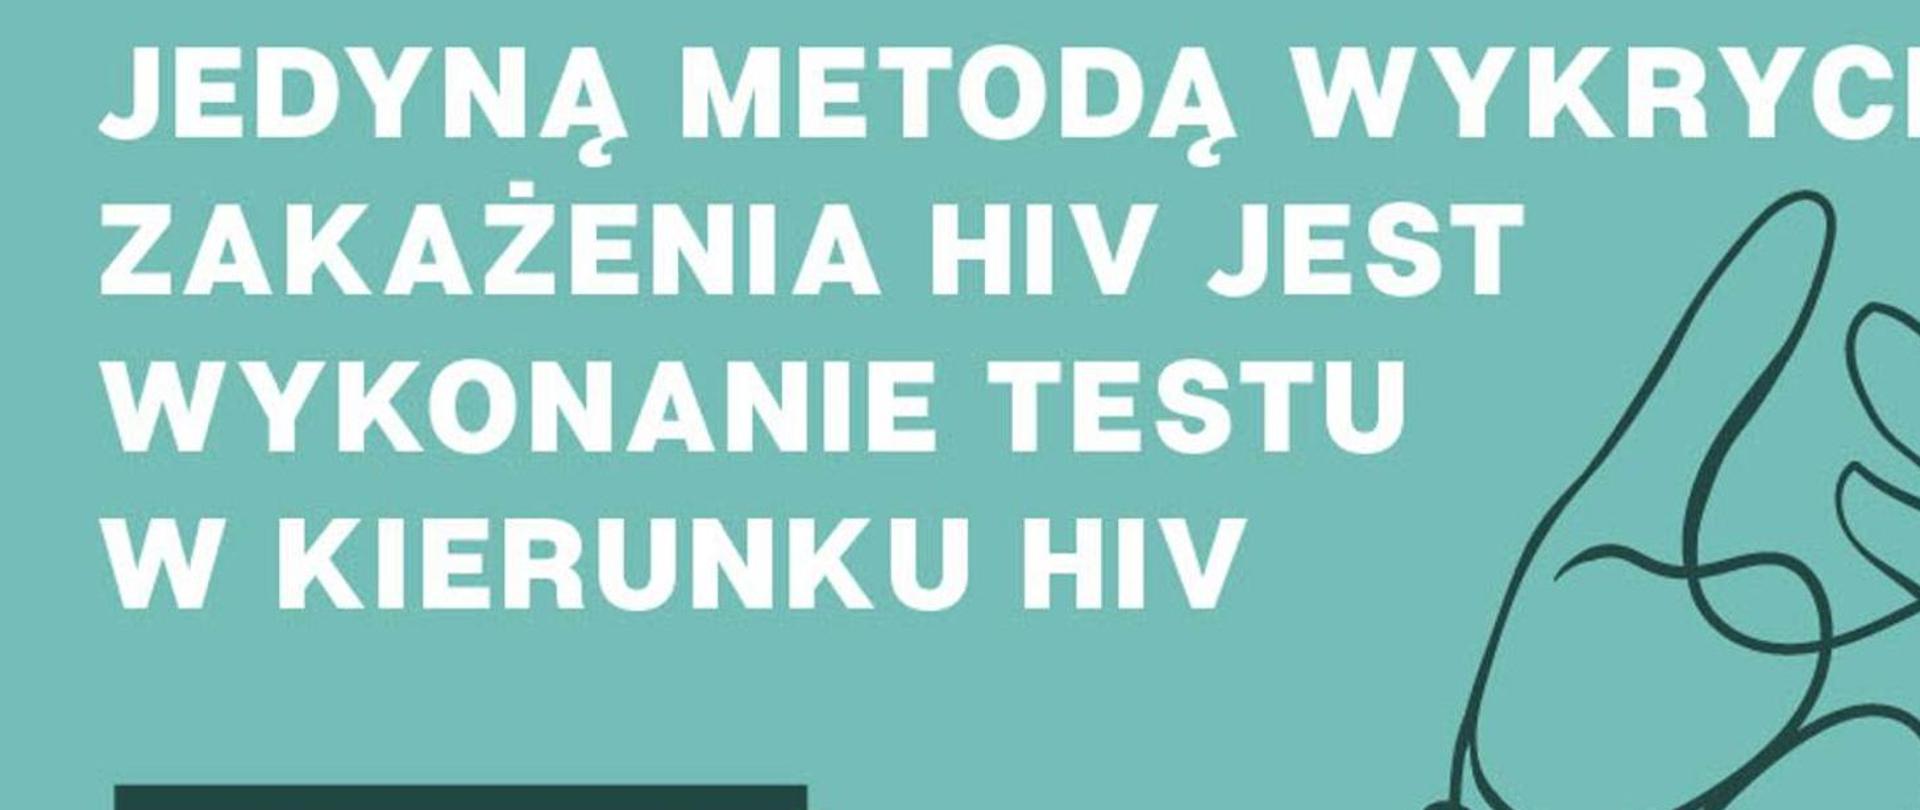 HIV
